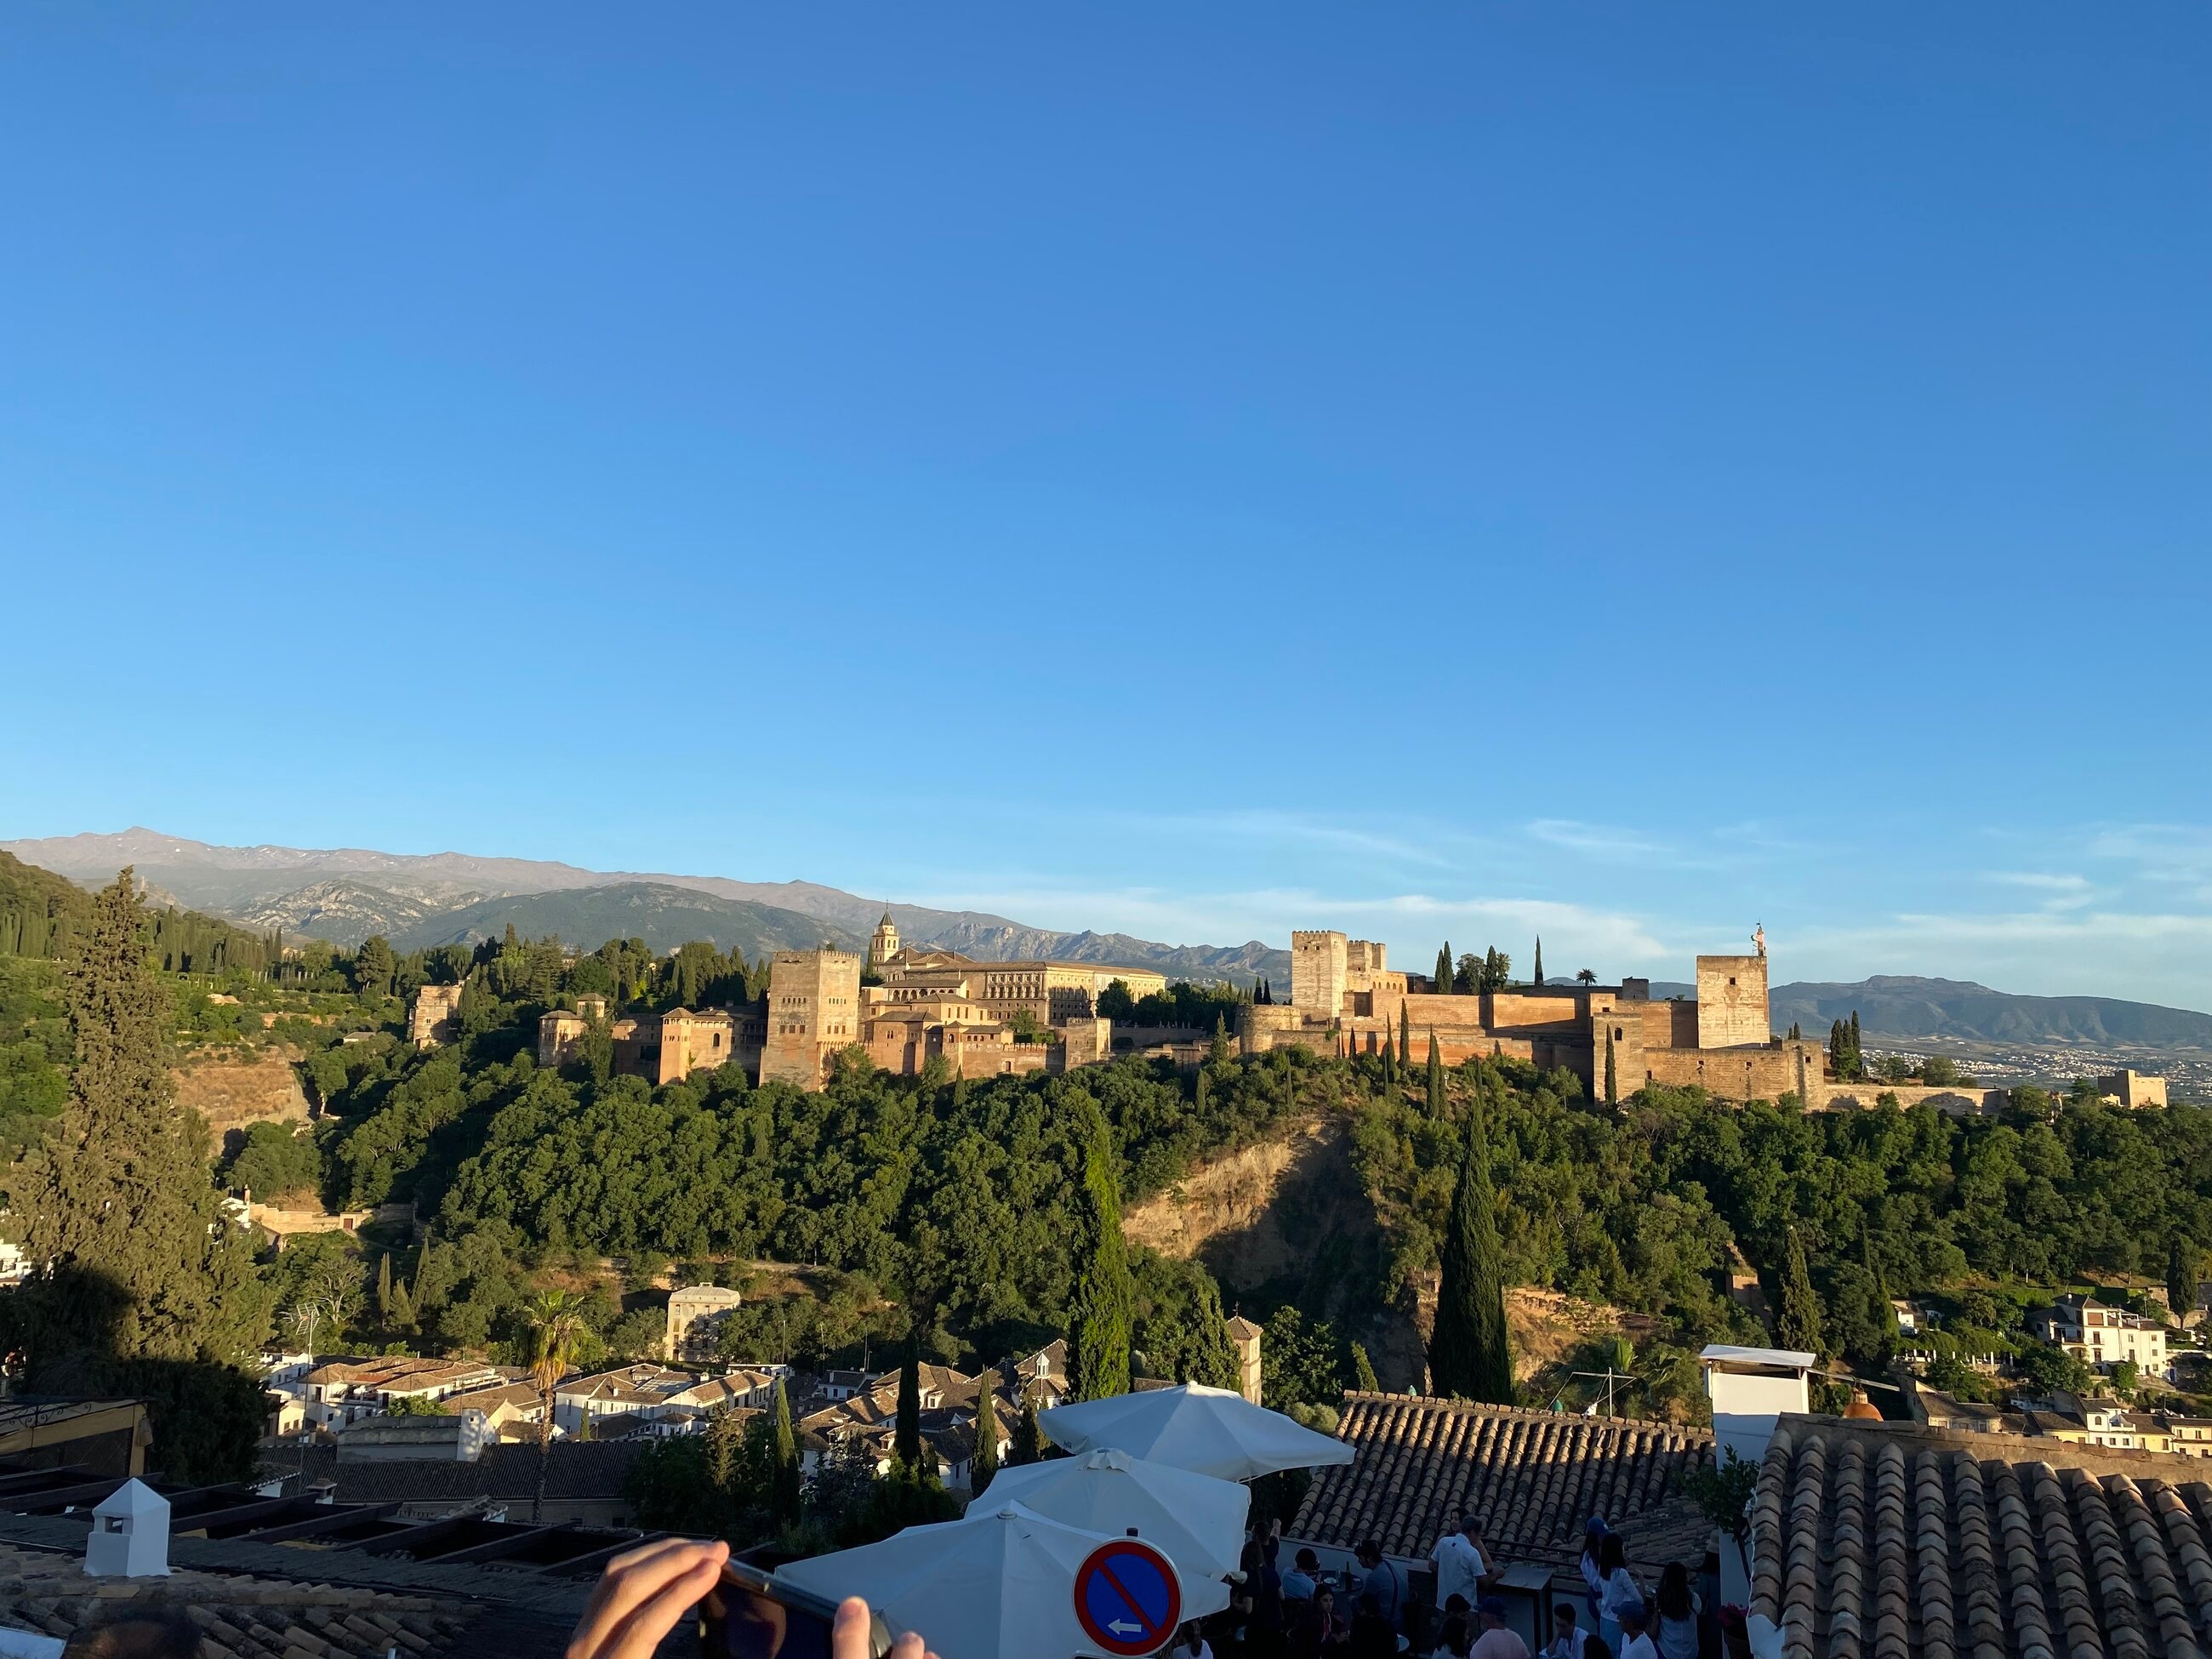 Alhambra, #2 tourist attraction in Spain